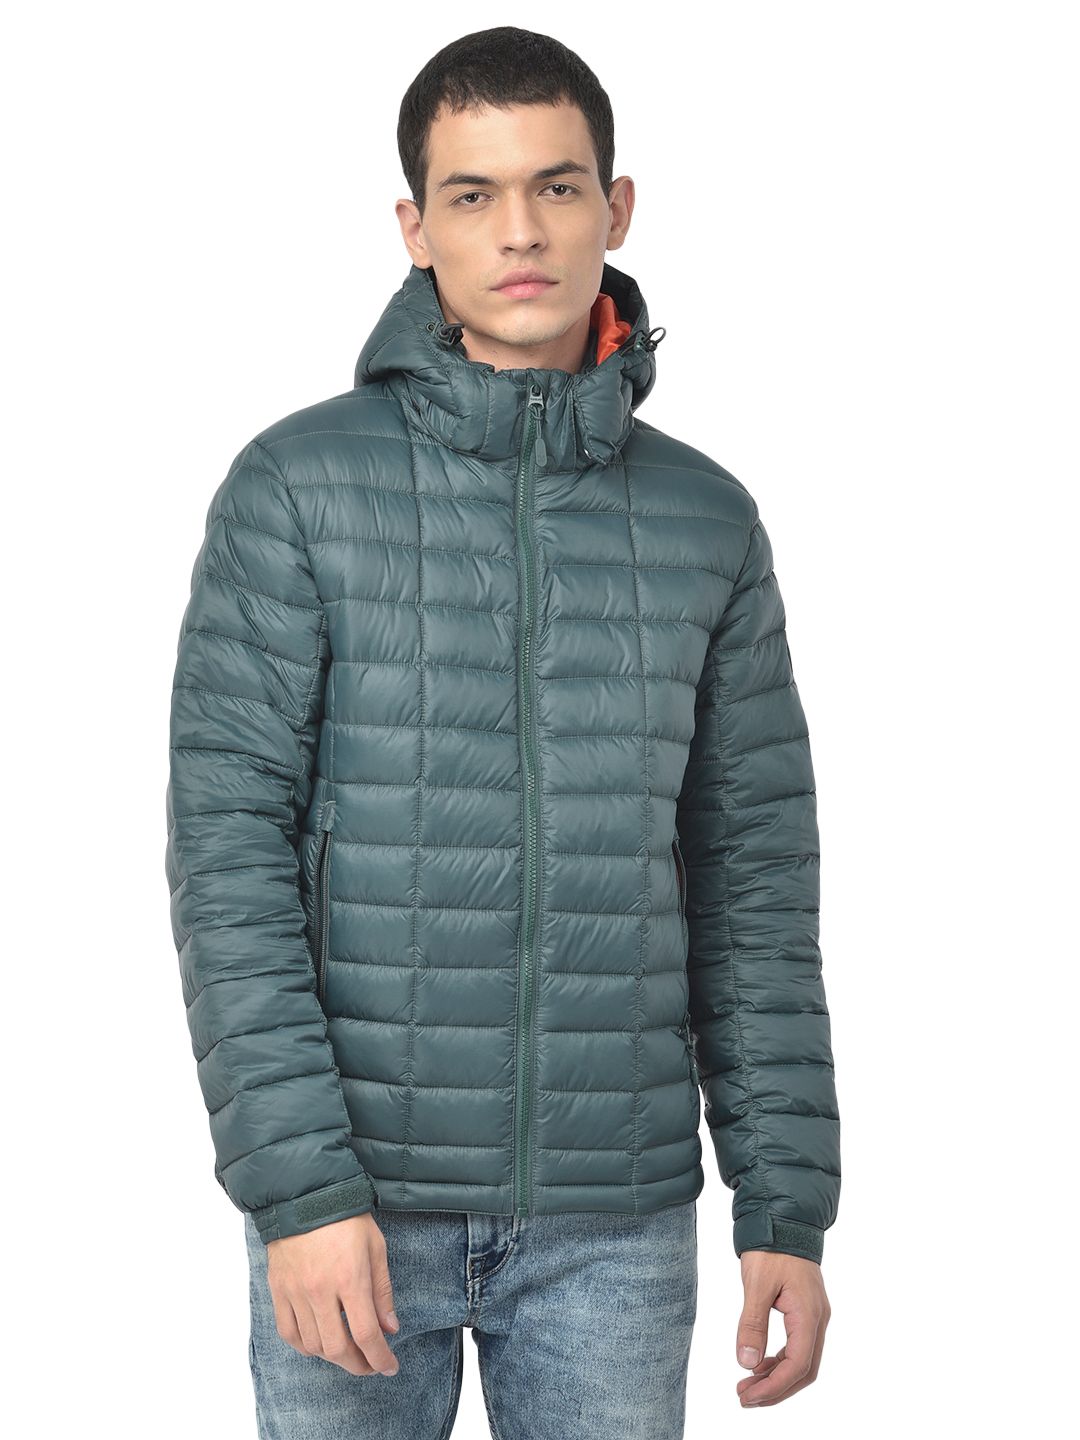 Buy Woodland Mens Polyster Casual Regular Jacket (Khaki, S) at Amazon.in